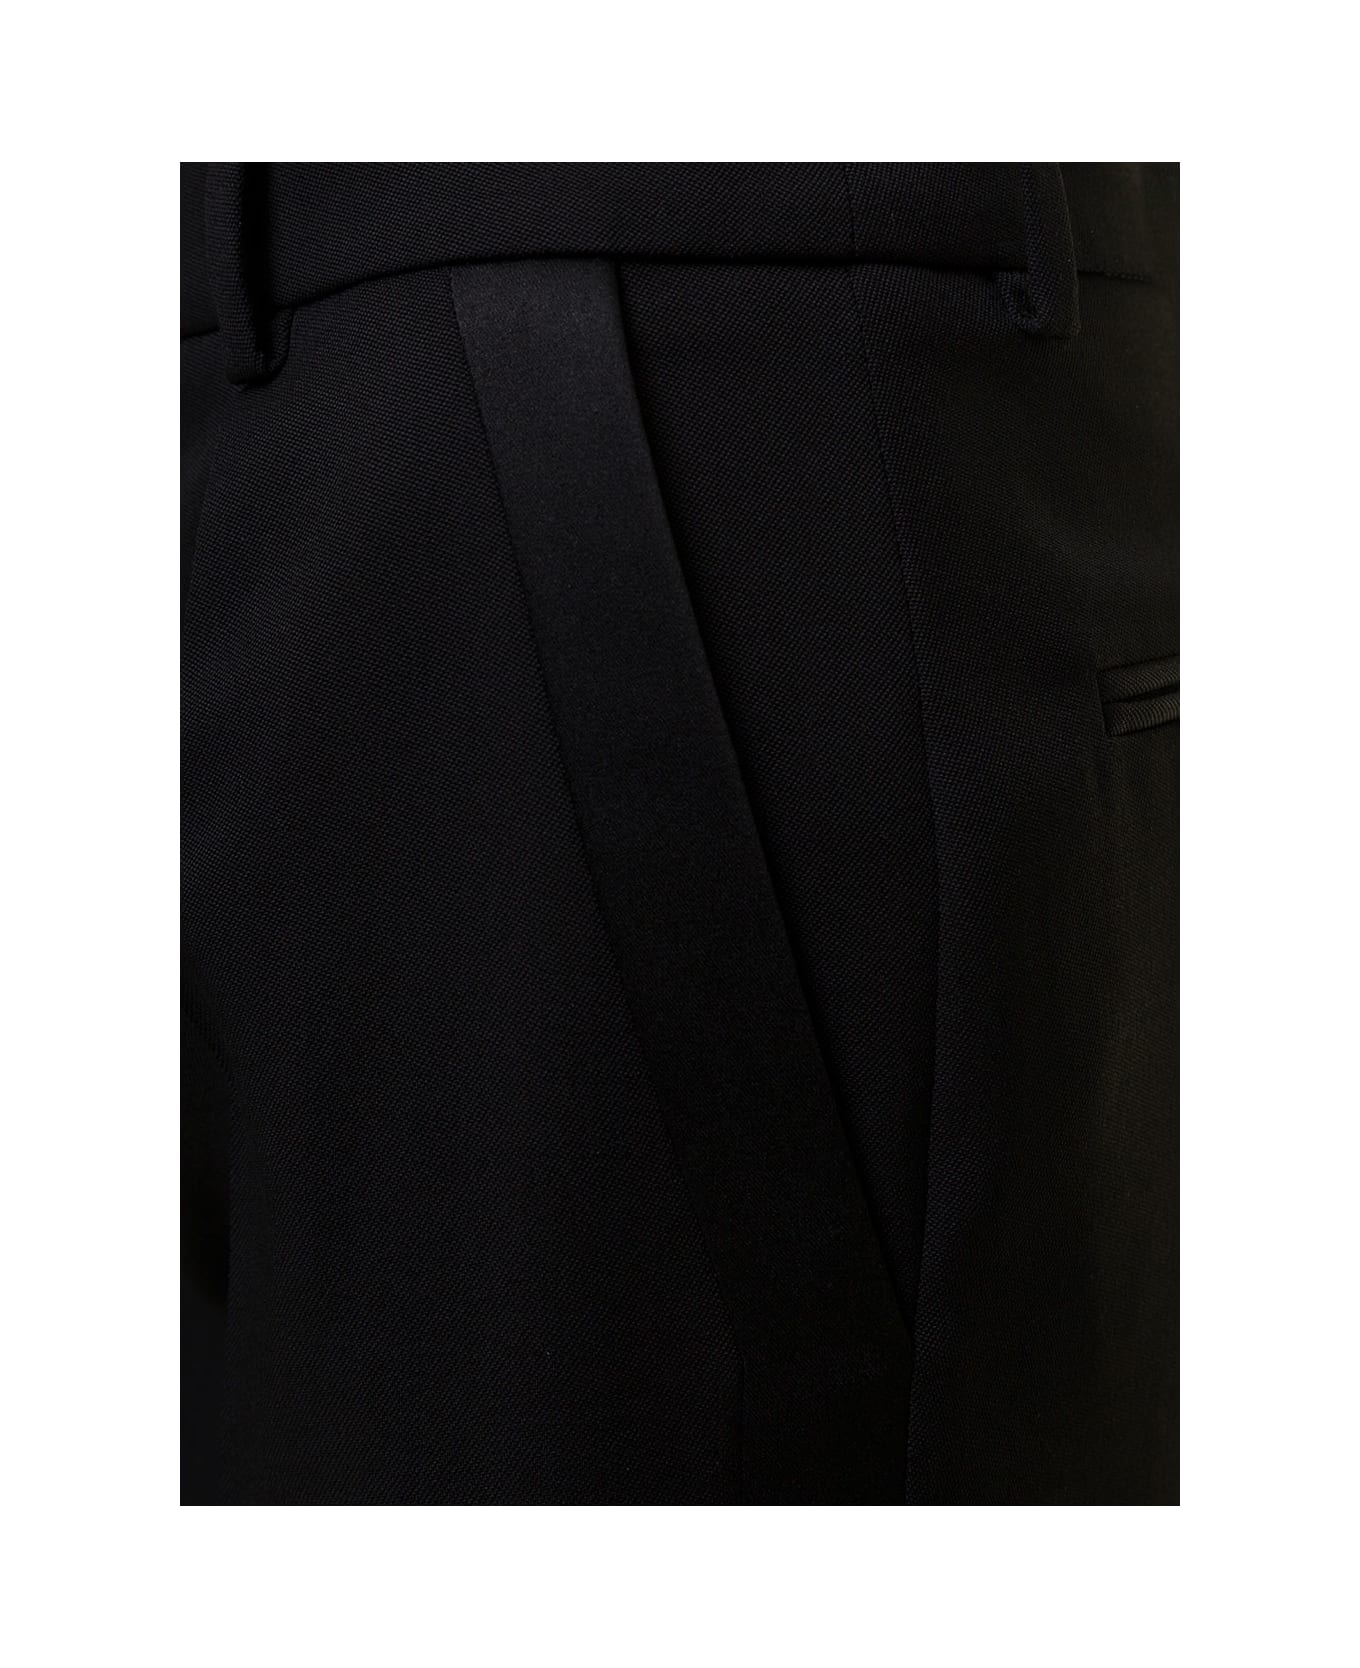 Saint Laurent Wool Pants - Black